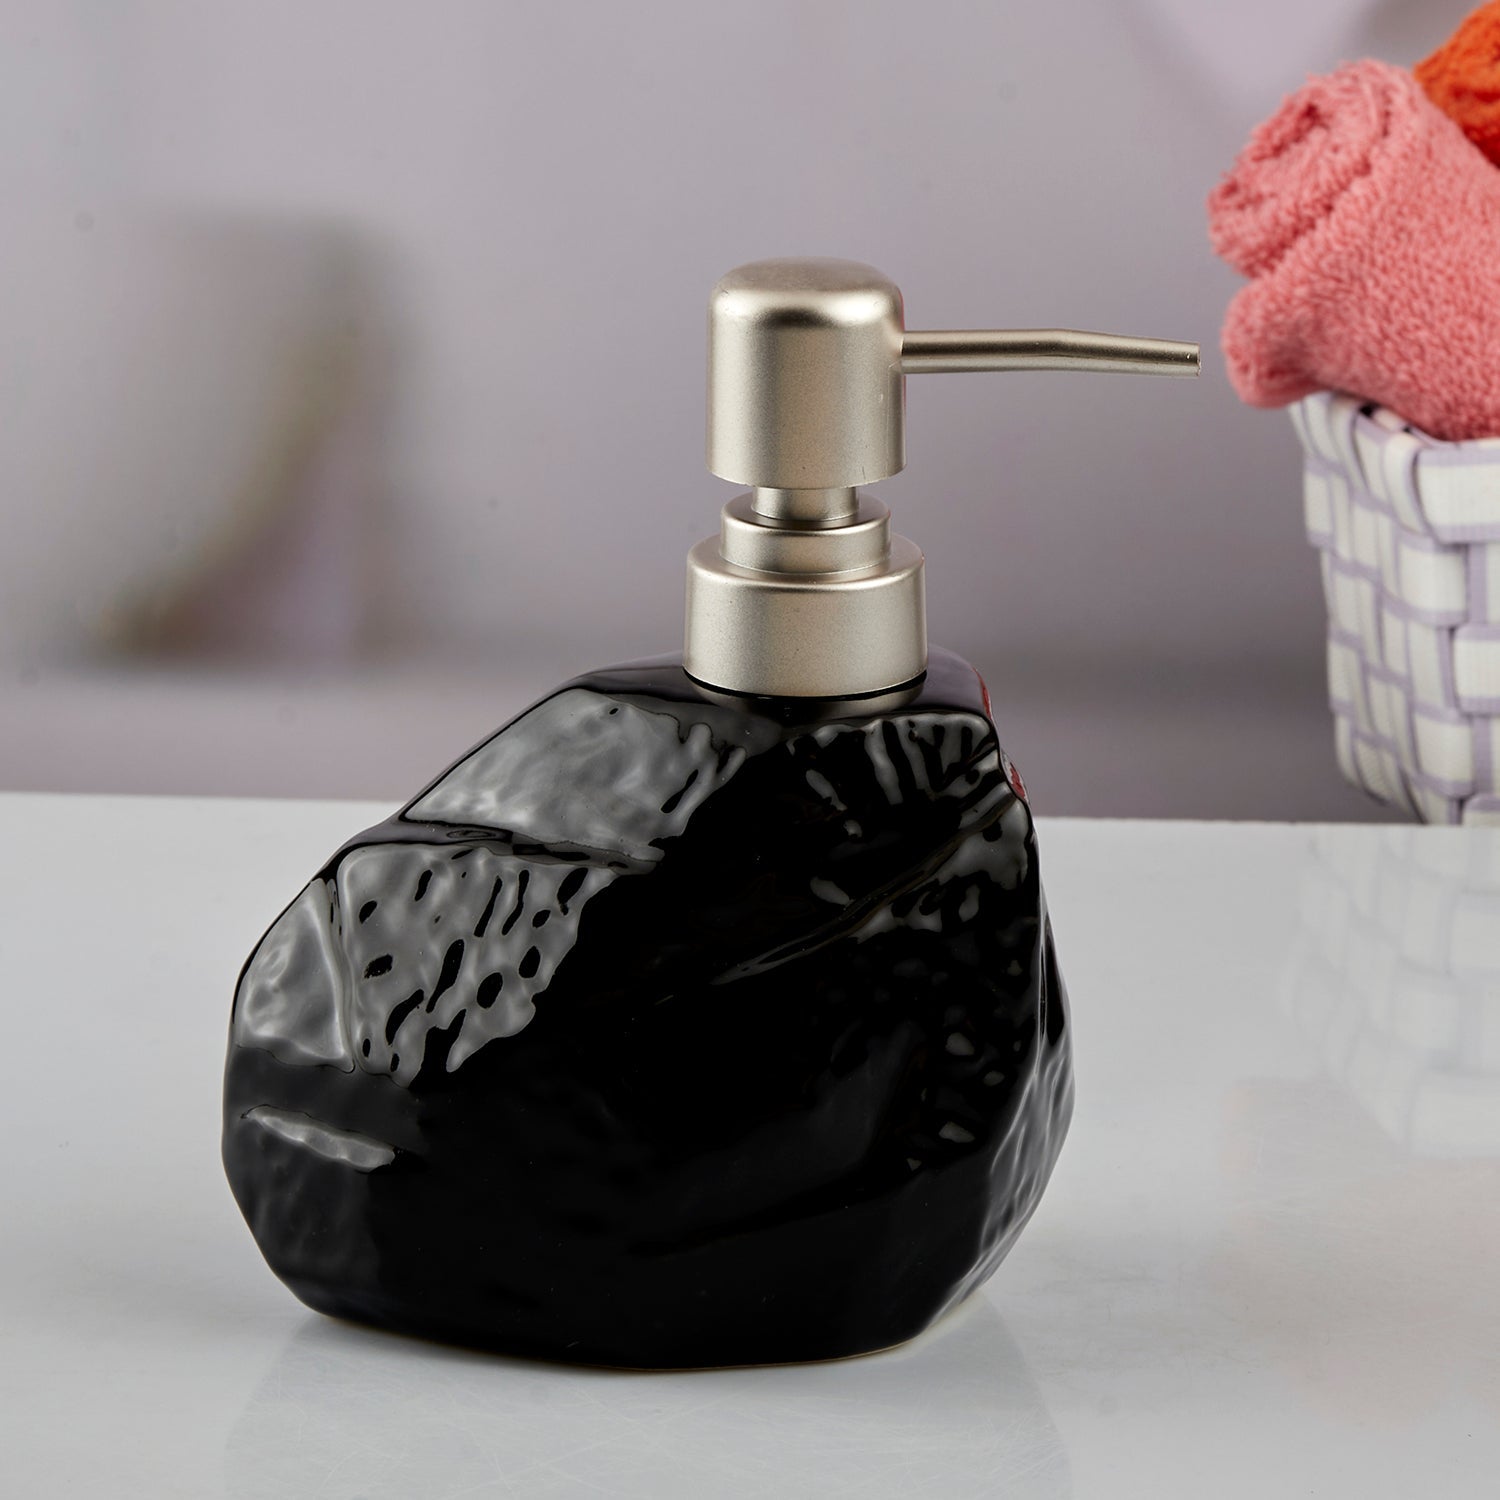 Ceramic Soap Dispenser liquid handwash pump for Bathroom, Set of 1, Black (10617)